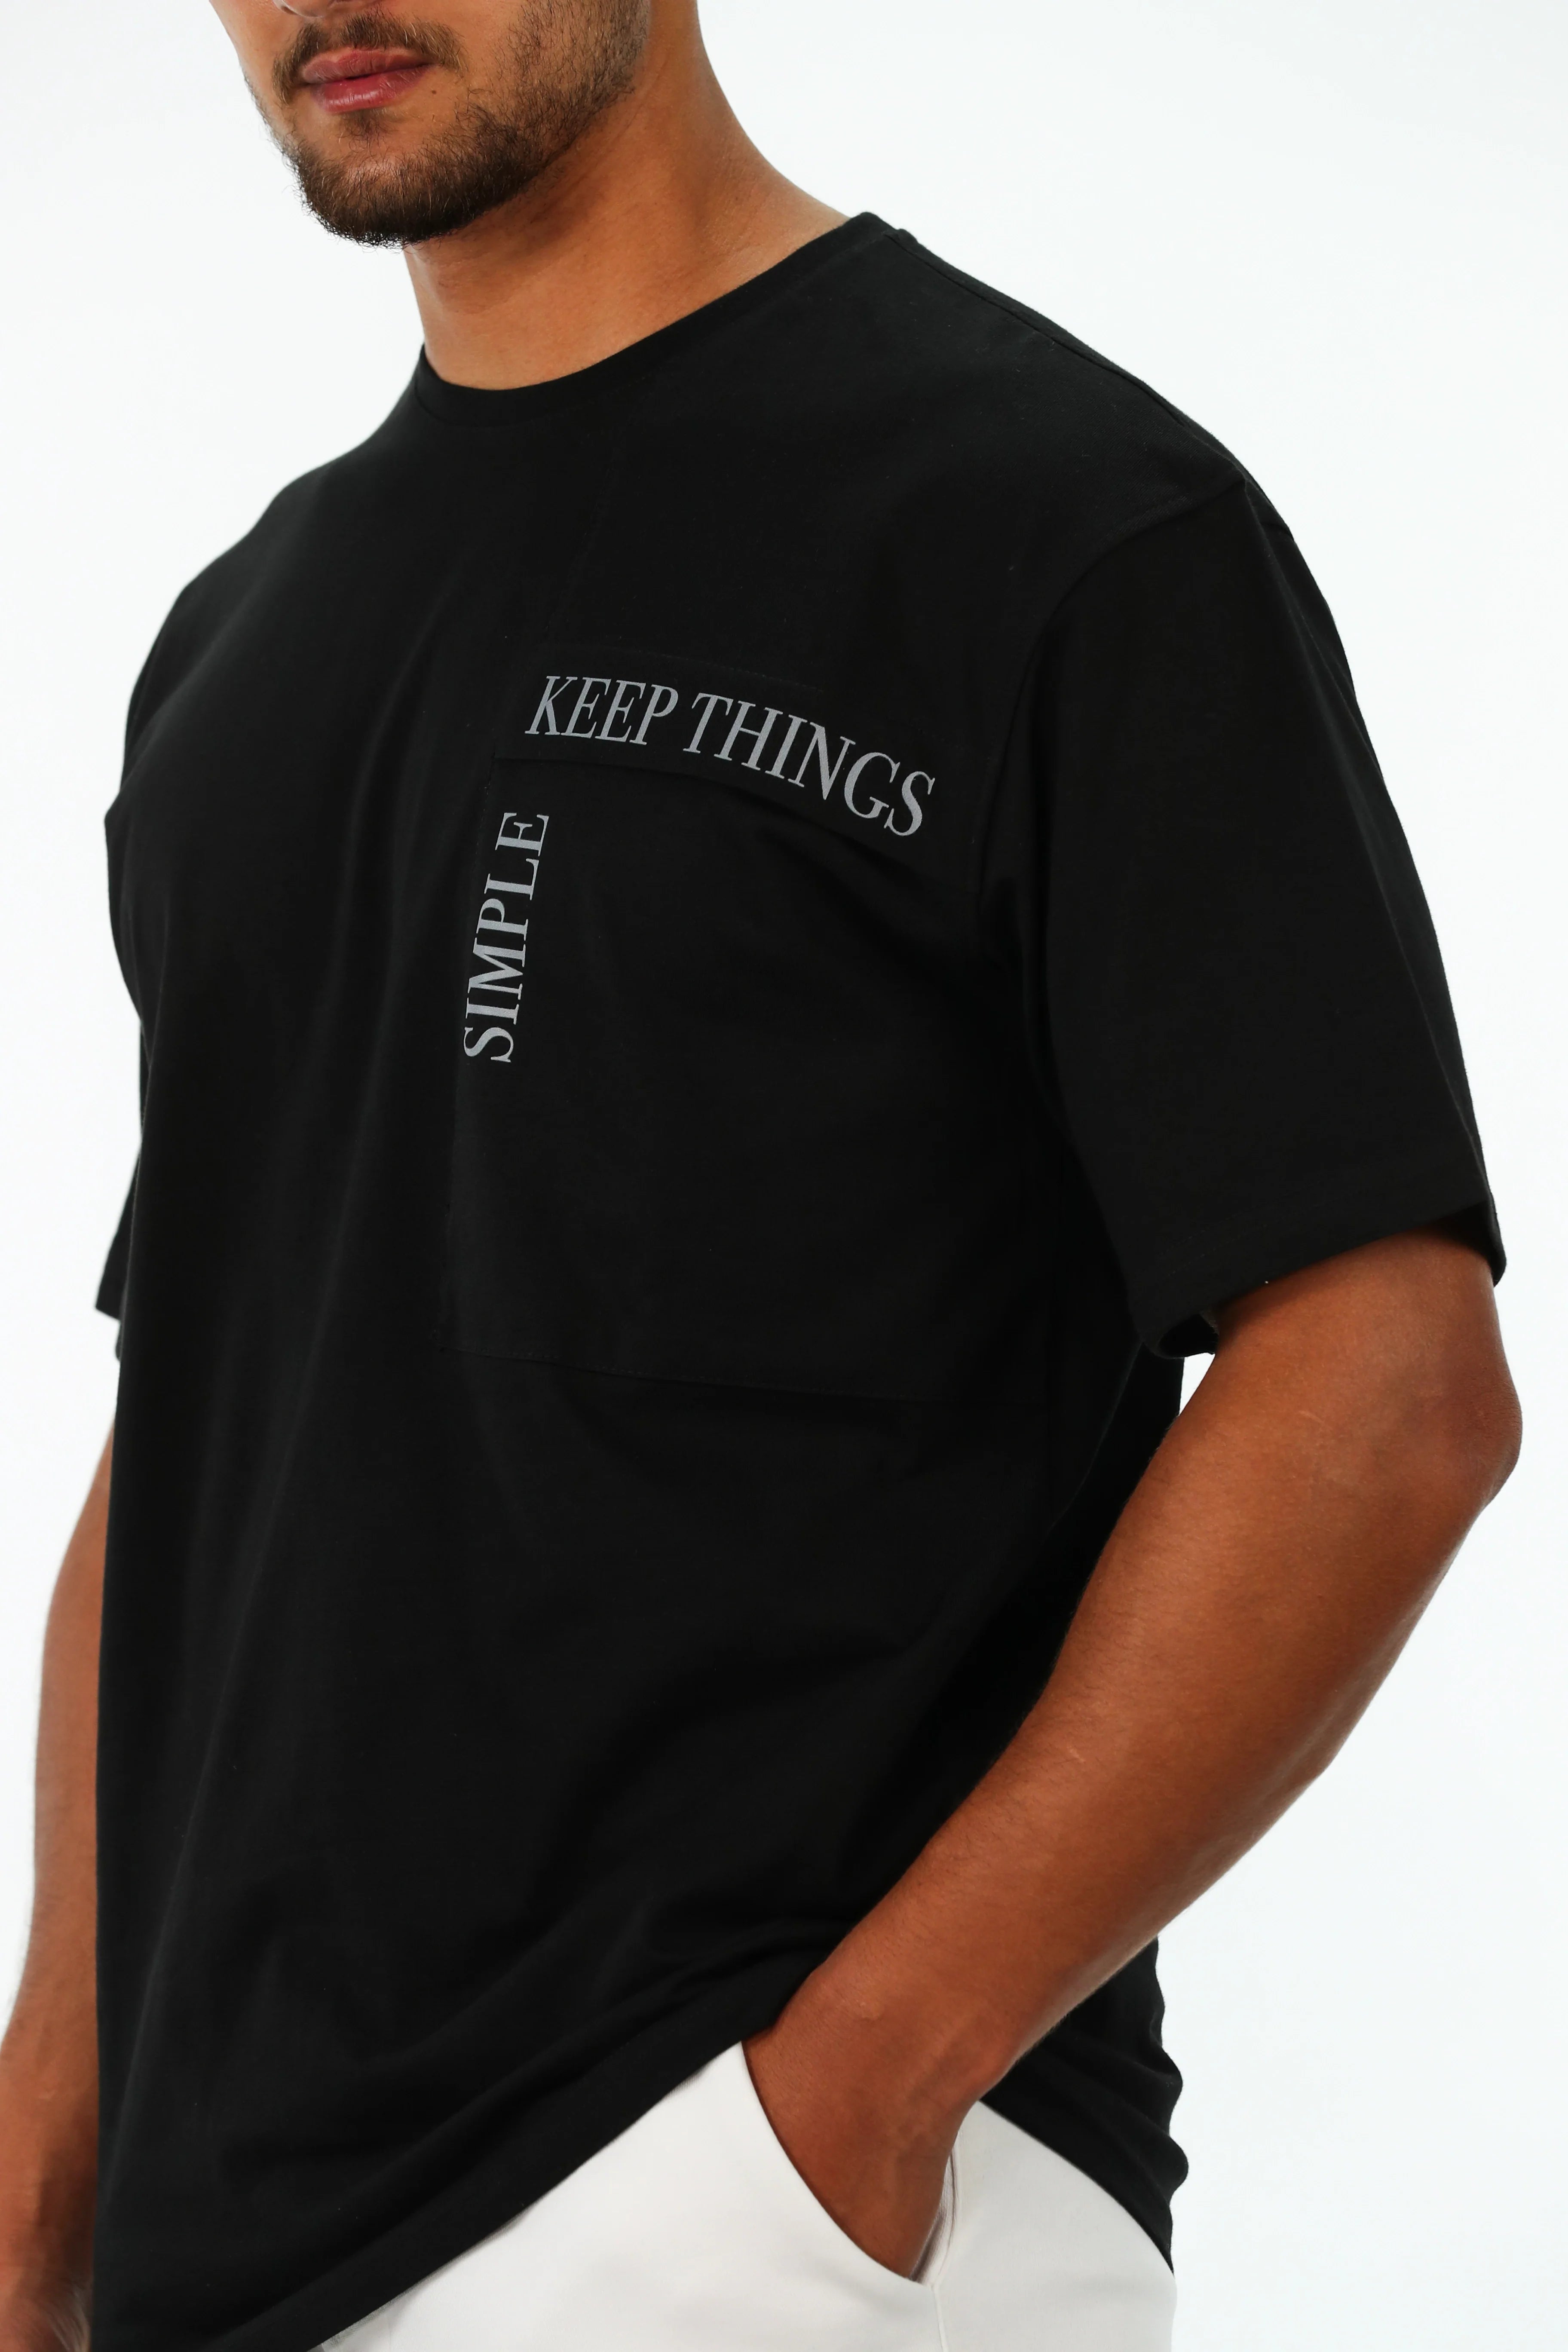 Oversized Black T-Shirt With Pocket Design